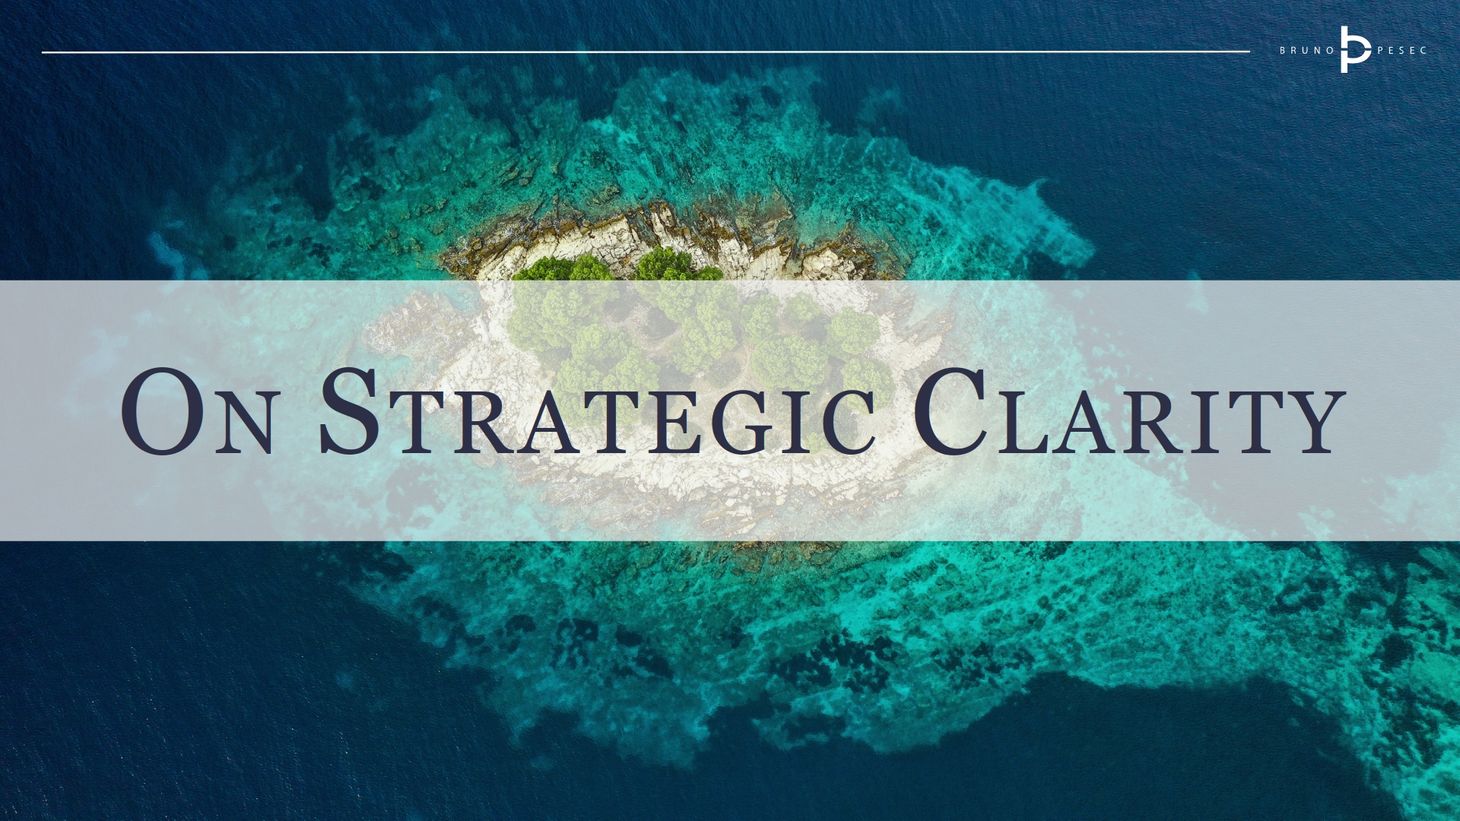 On strategic clarity